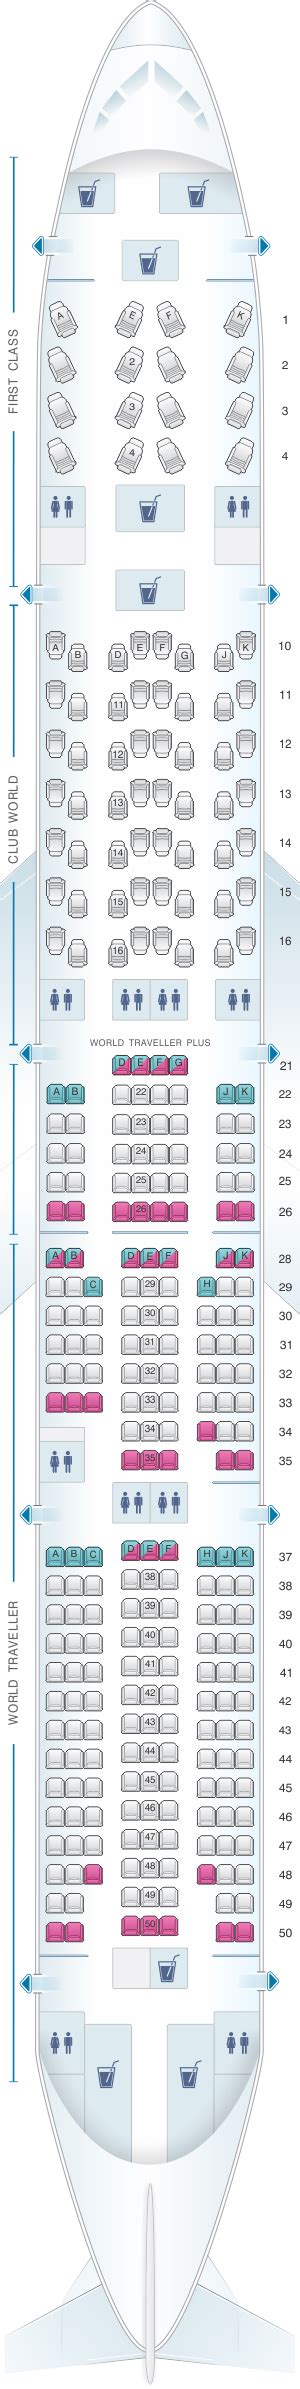 ba 777 300 seat map